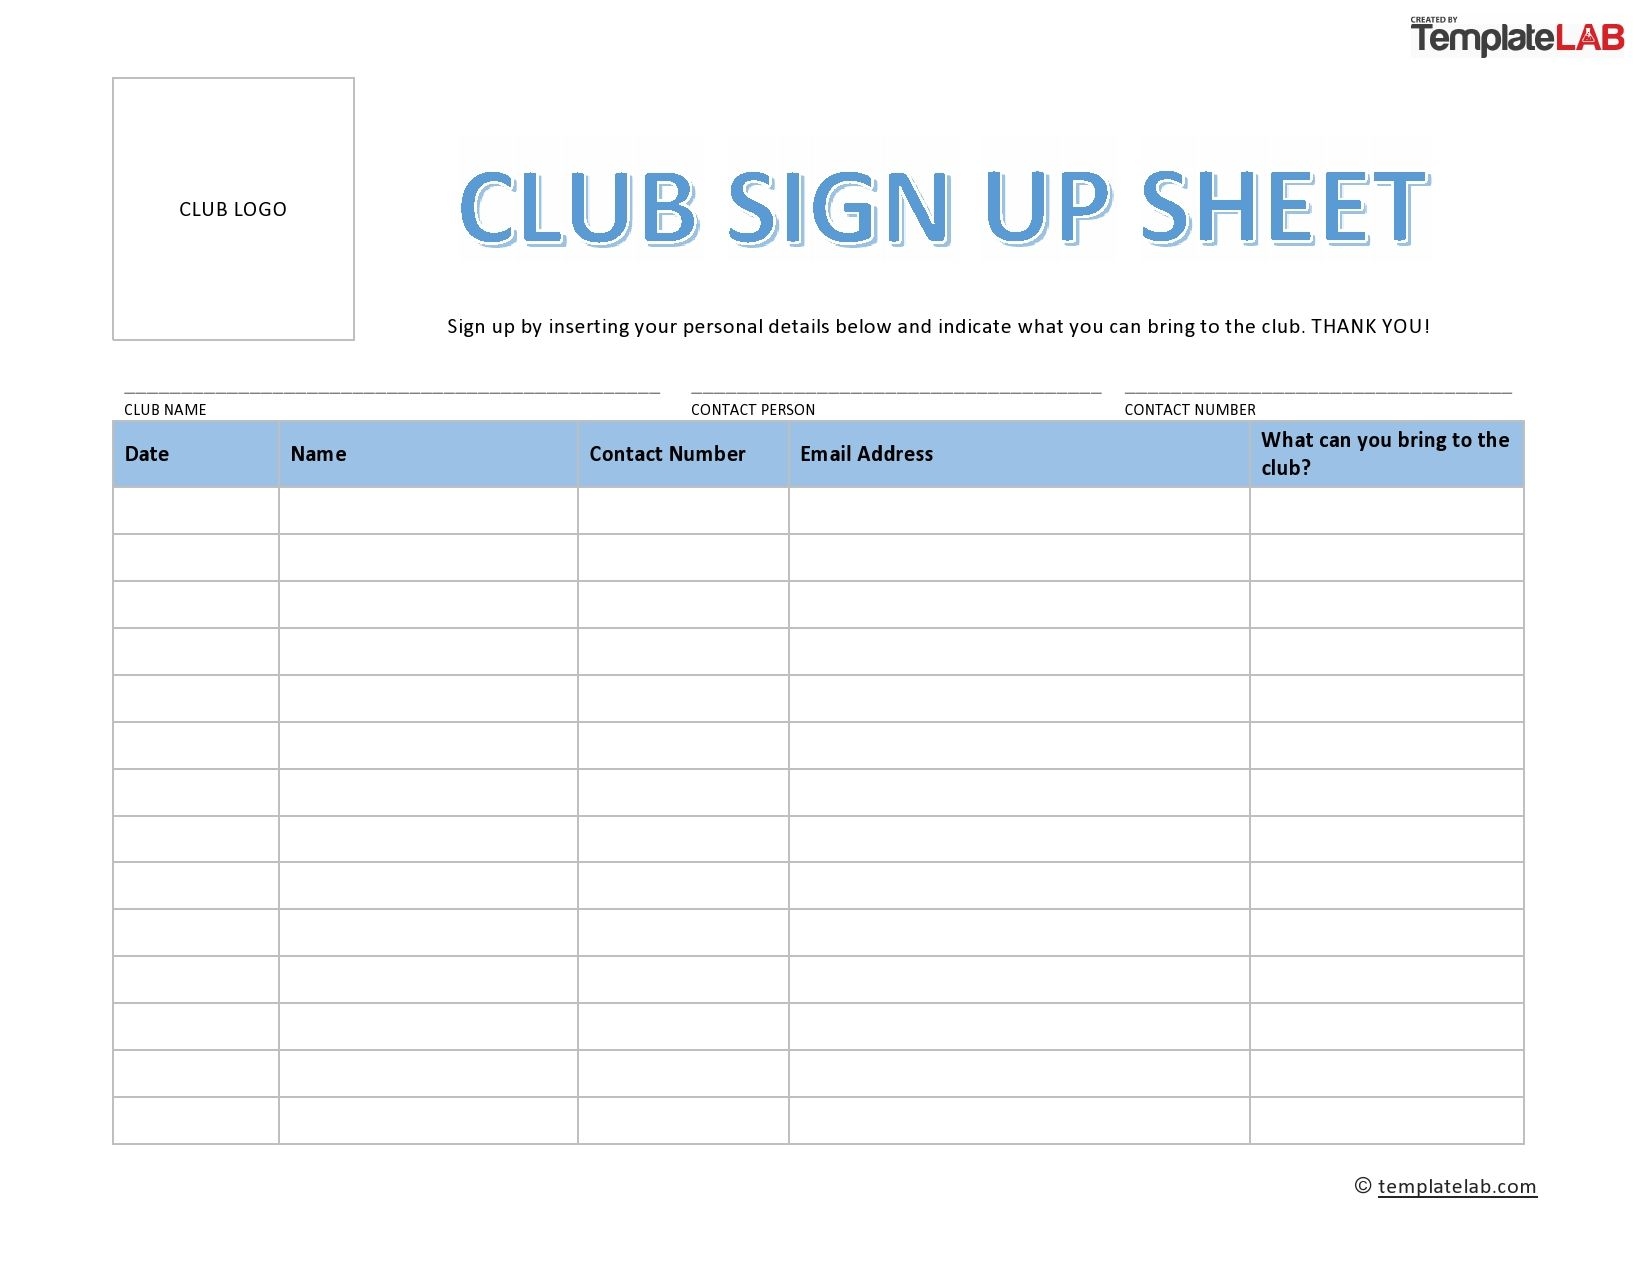 How to Calendar Sign Up Sheet Template Get Your Calendar Printable